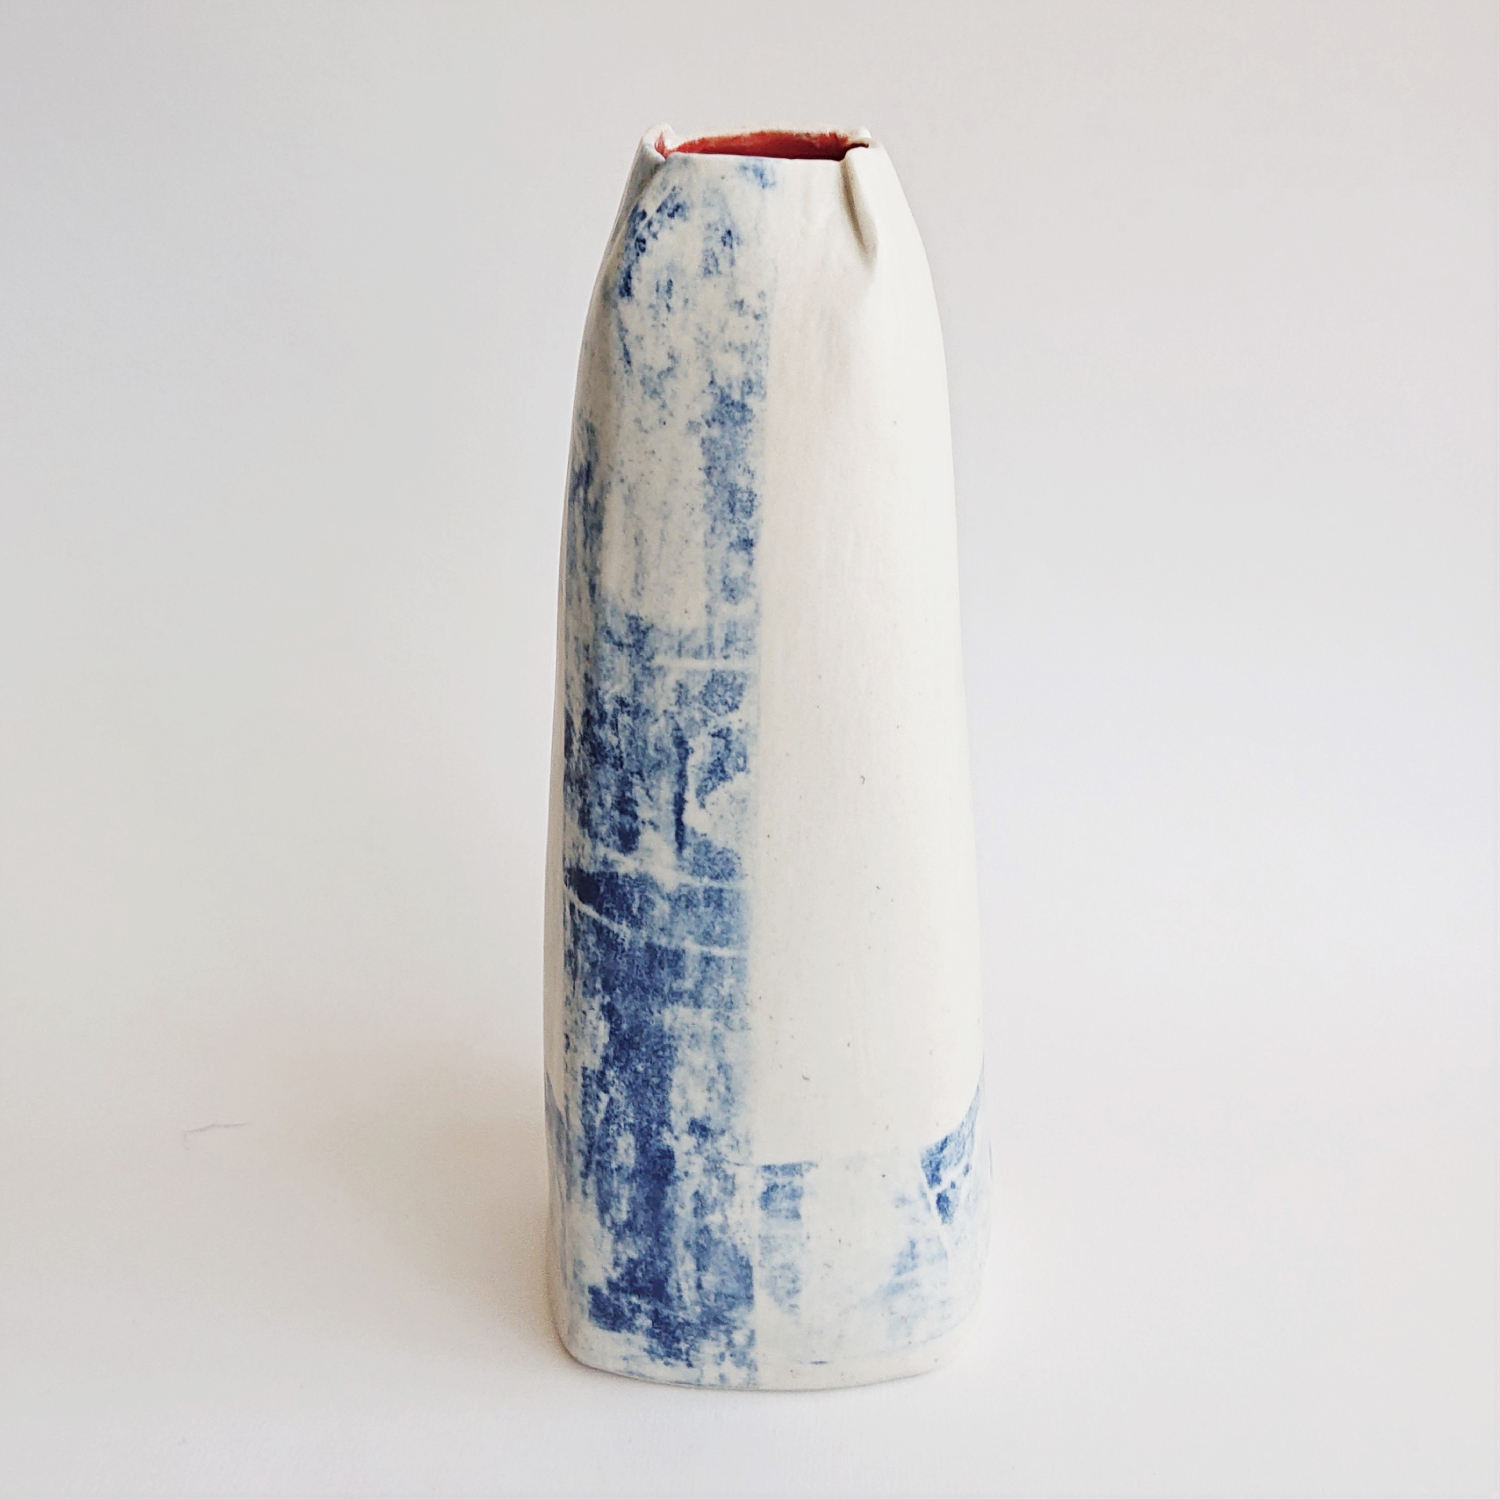 Hand-built porcelain vase by Clay Shed Studio